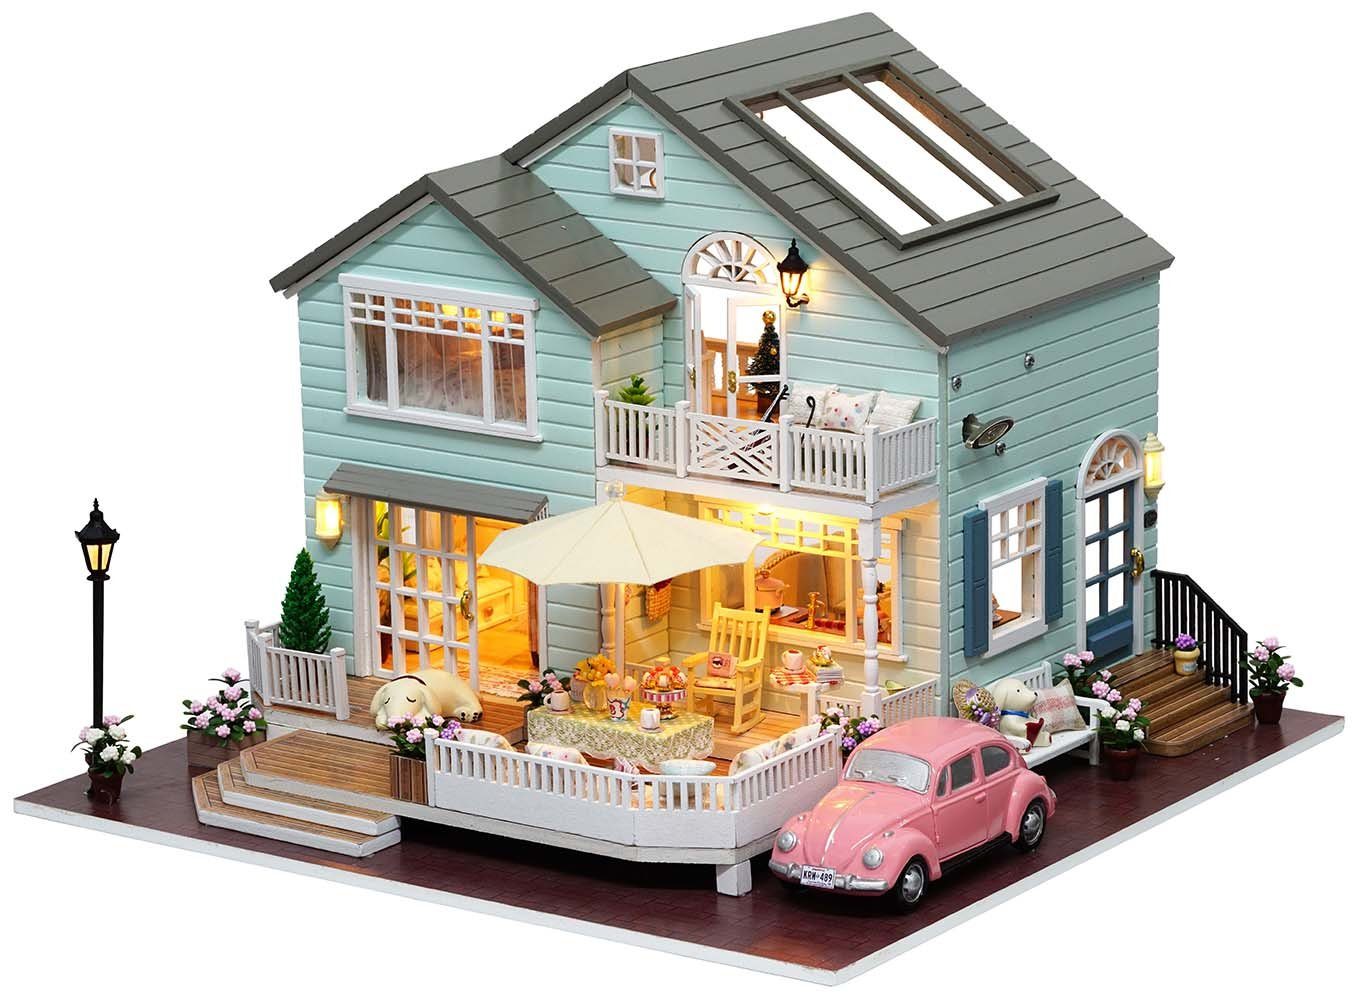 Cute Room 3D-Puzzle DIY holz Miniature Haus Puppenhaus Queenstown,  Puzzleteile, 3D-Puzzle, Miniaturhaus, Maßstab 1:32, Modellbausatz zum  basteln